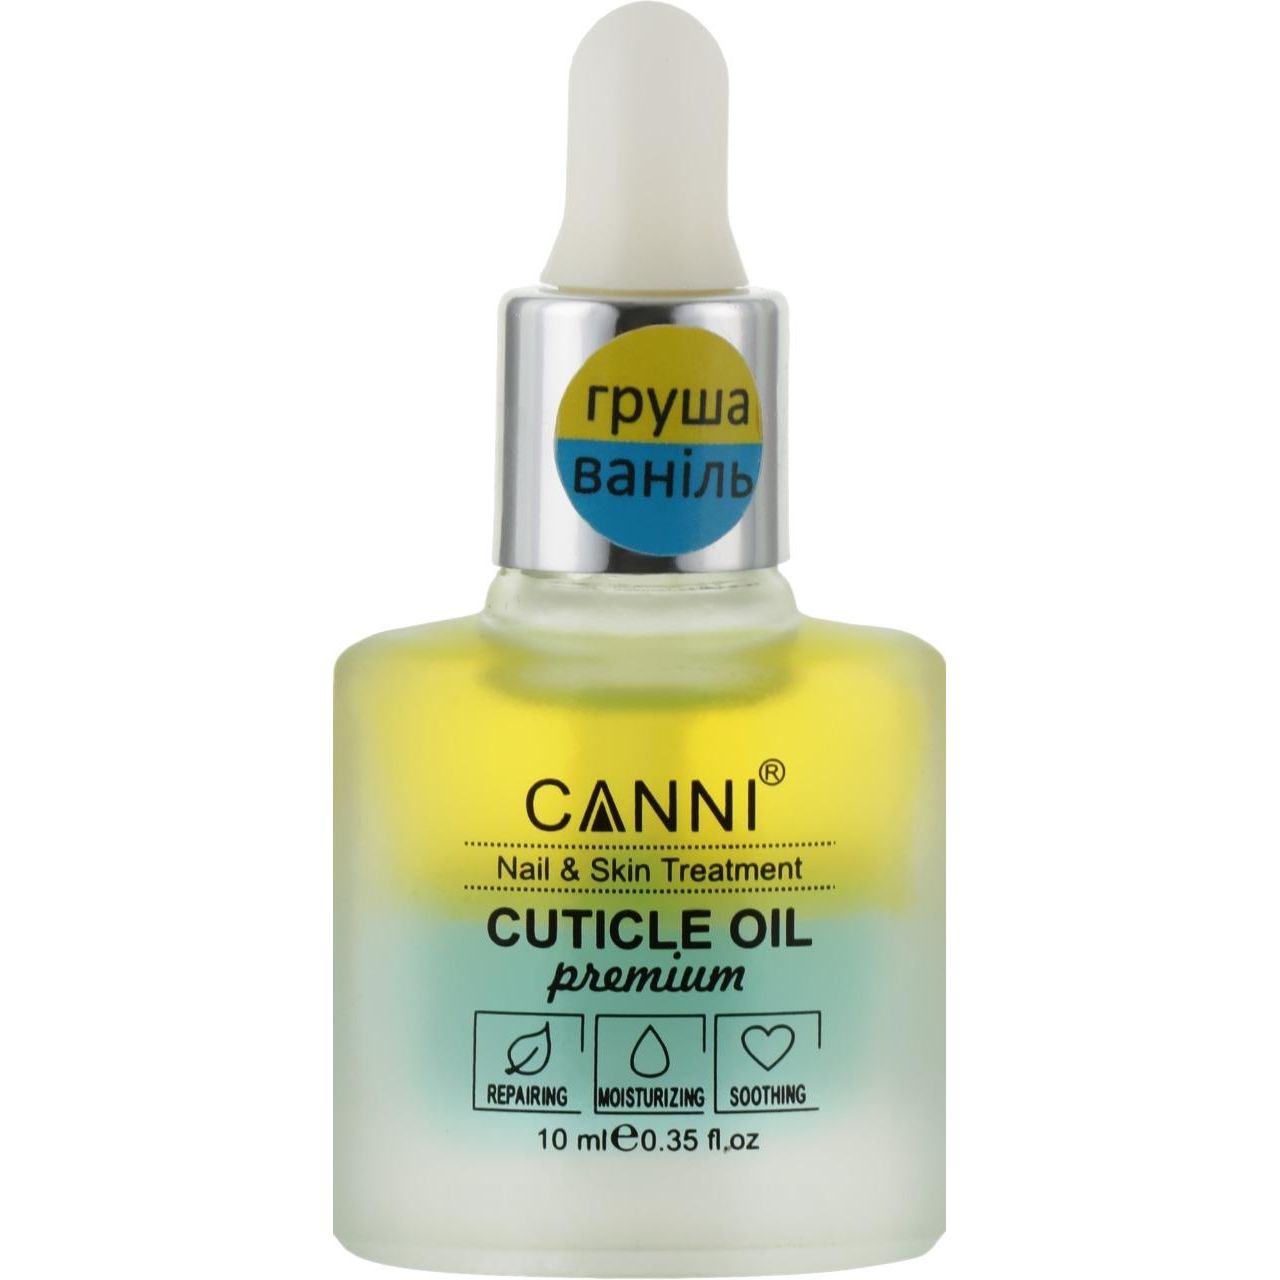 Олійка для кутикули Canni Premium Cuticle Oil двофазна Груша-Ваніль 10 мл - фото 1